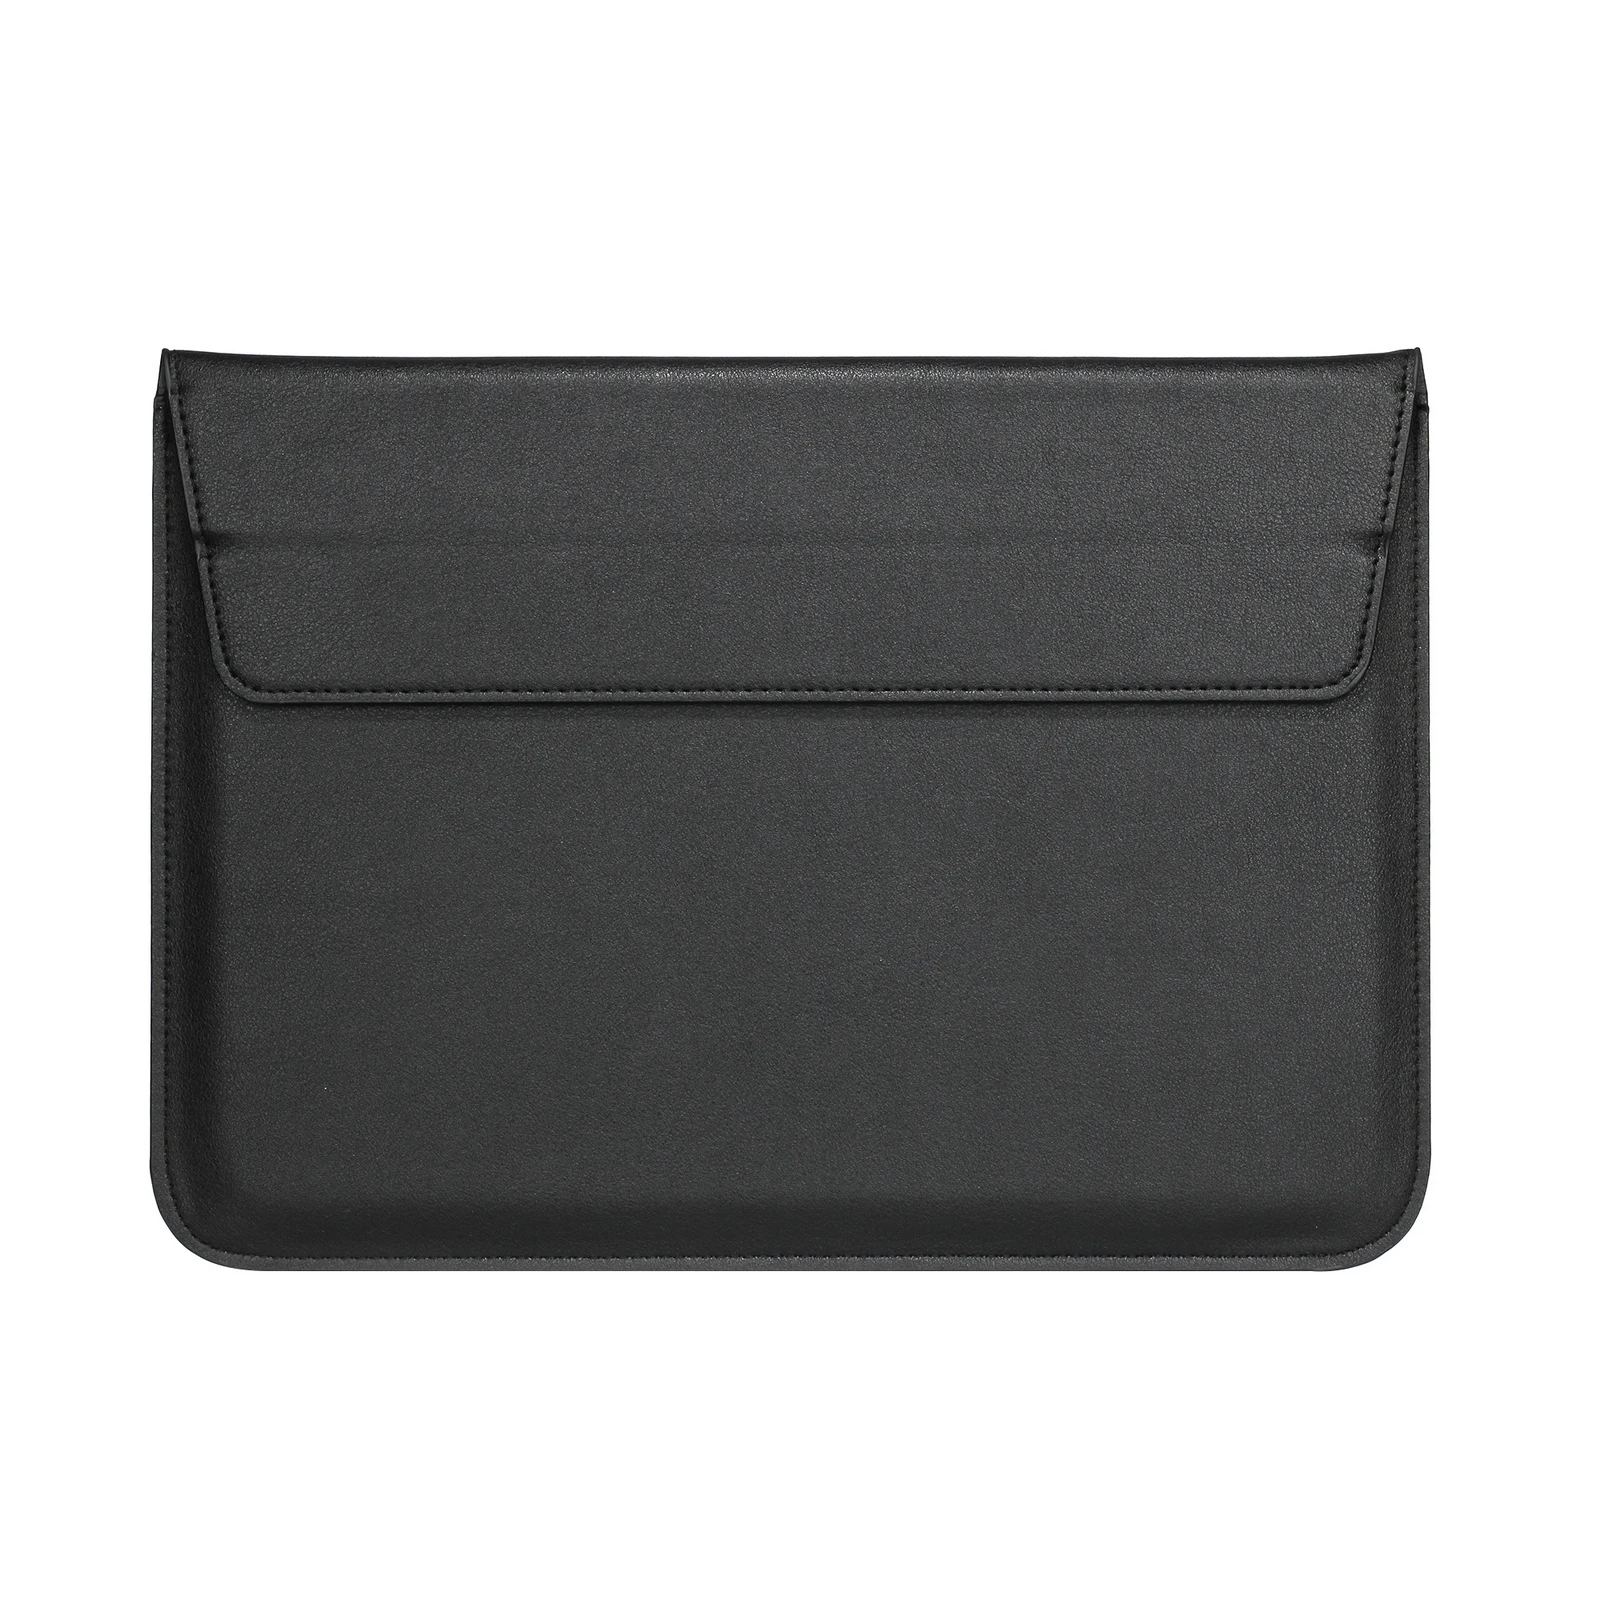 

Laptop Sleeve Bag Notebook Bag Envelope Fundas for Macbook Air Pro Retina 11 13 12 15 13.3 15.4 Pouch Case PU Leather Sleeve Bag